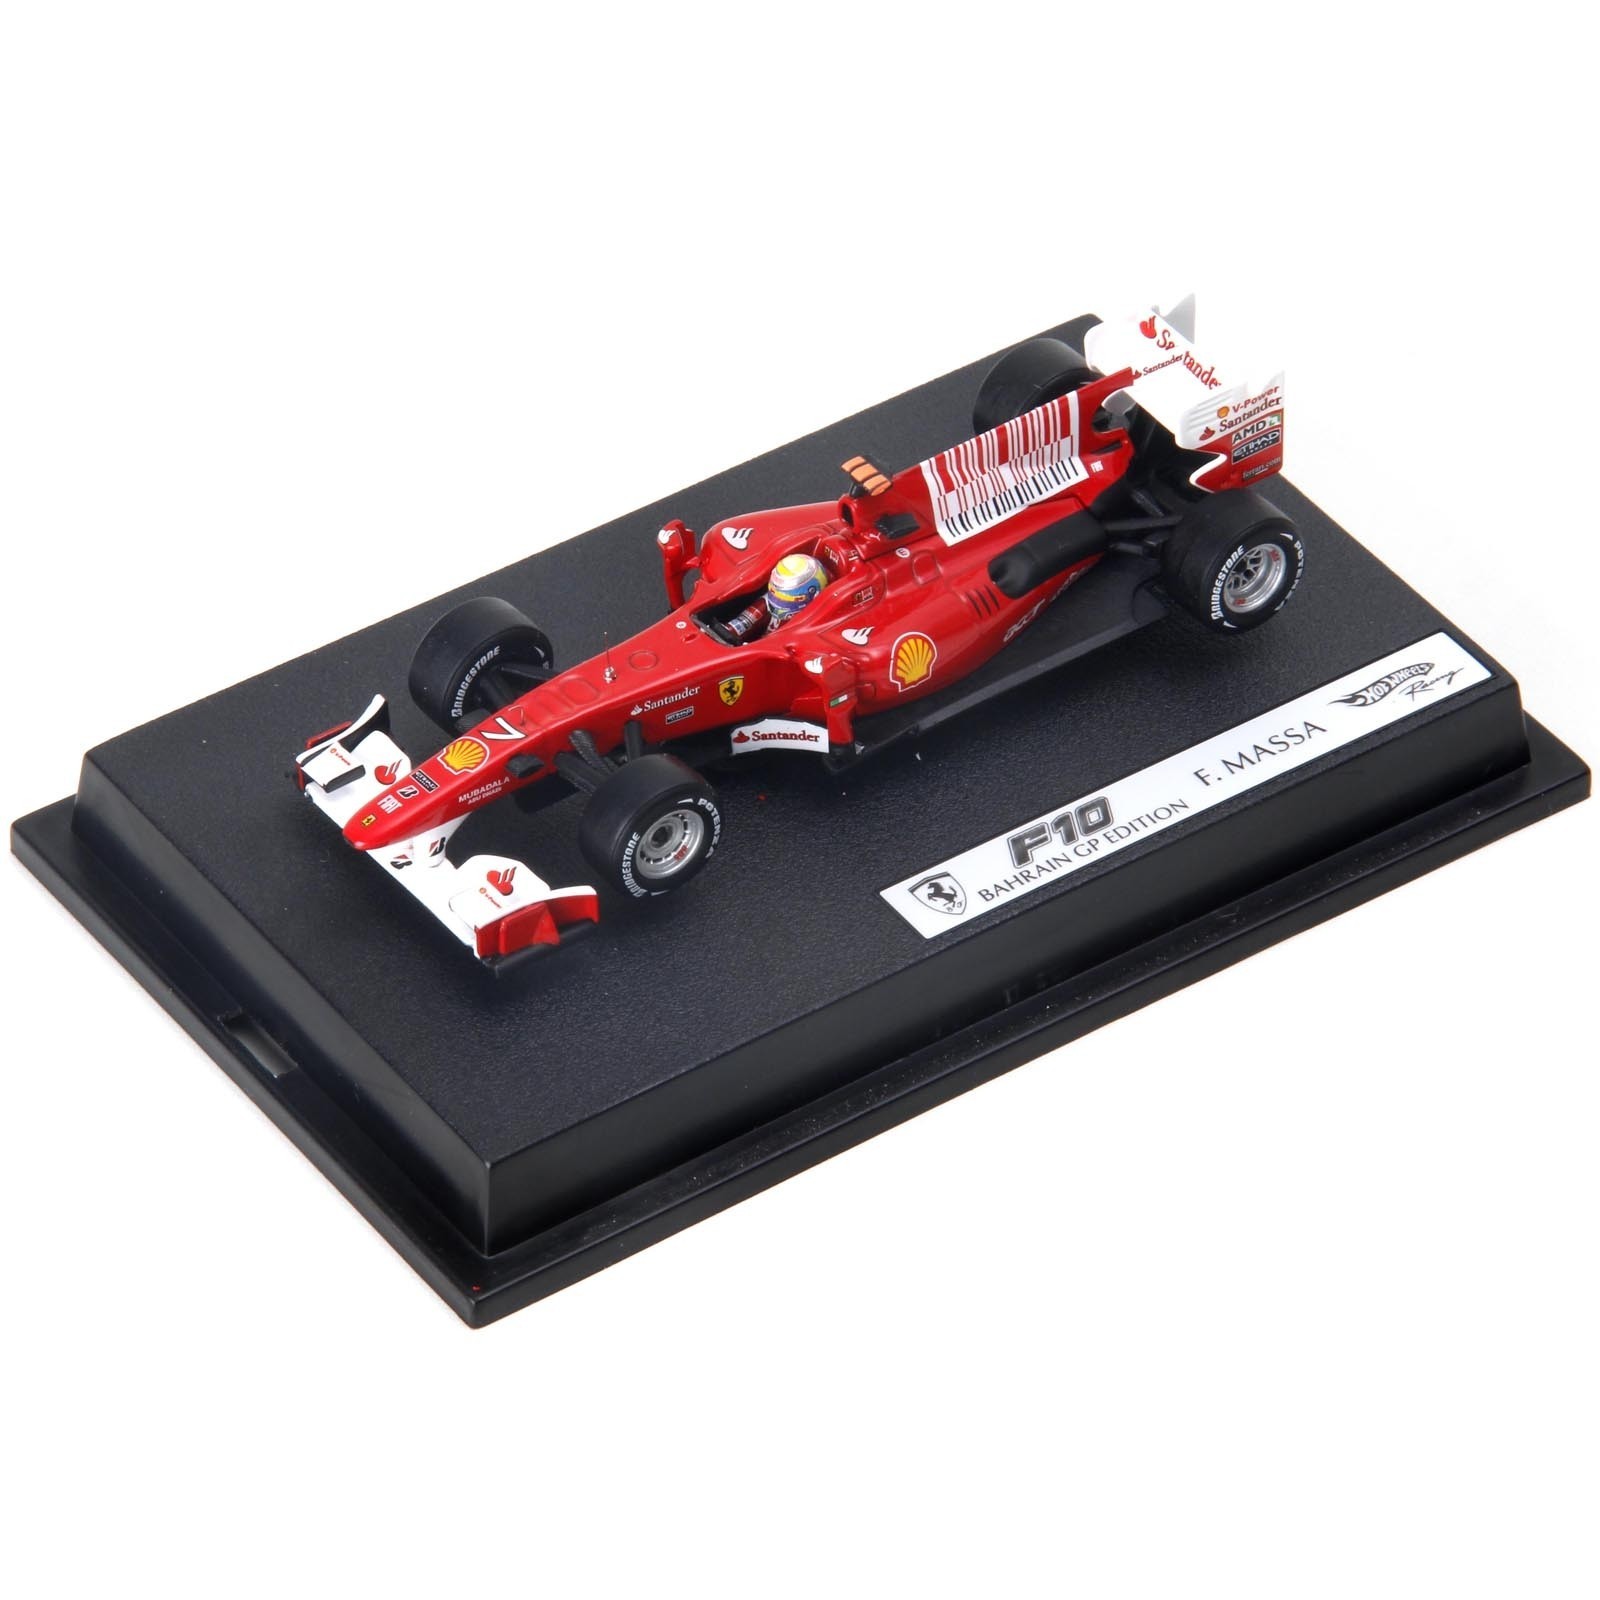 Hot Wheels - Ferrari F10 Massa #7, Edição GP Bahrain - 1/43: T6290